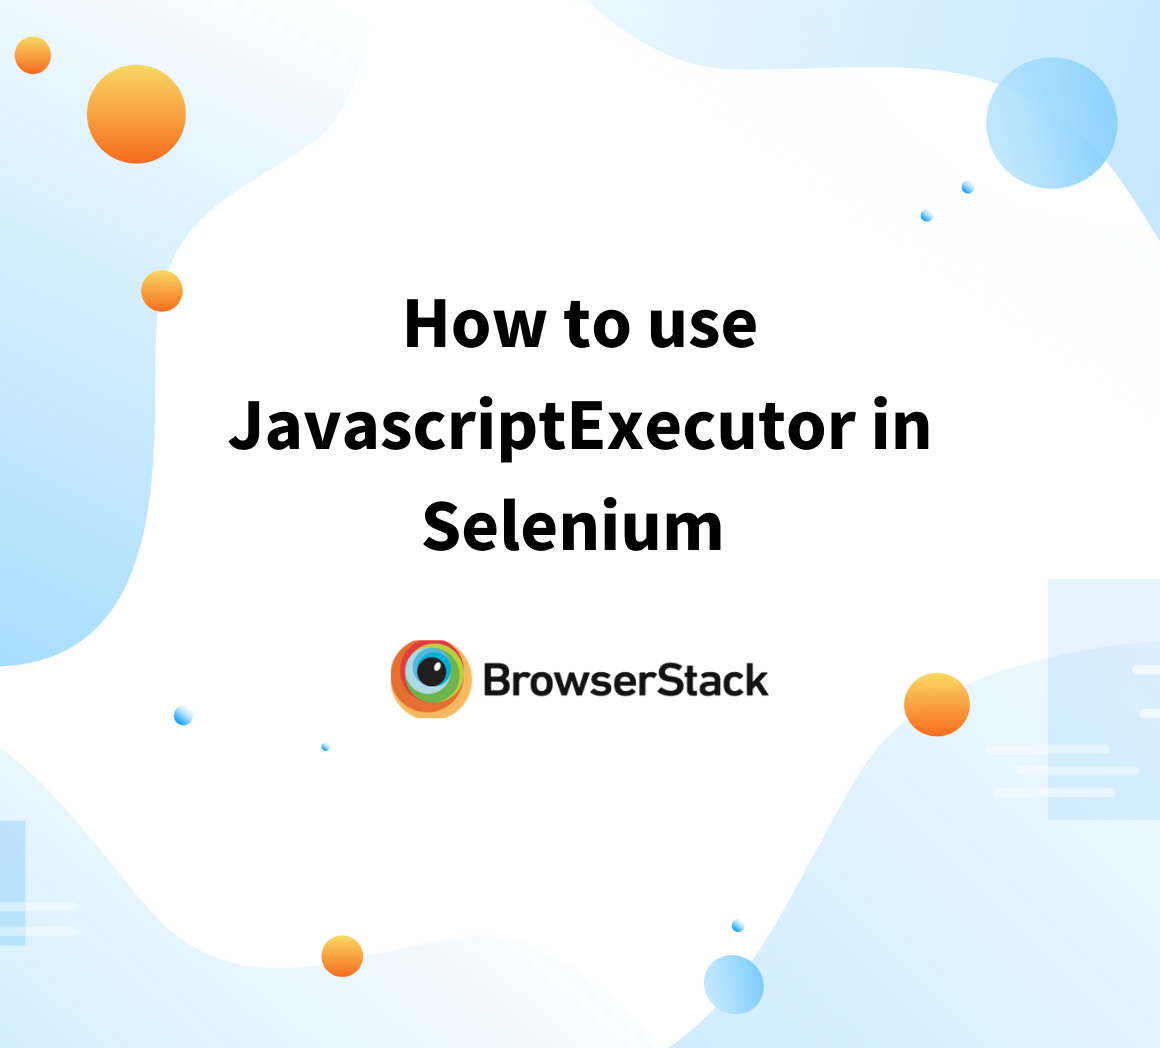 JavaSript Executor in Selenium